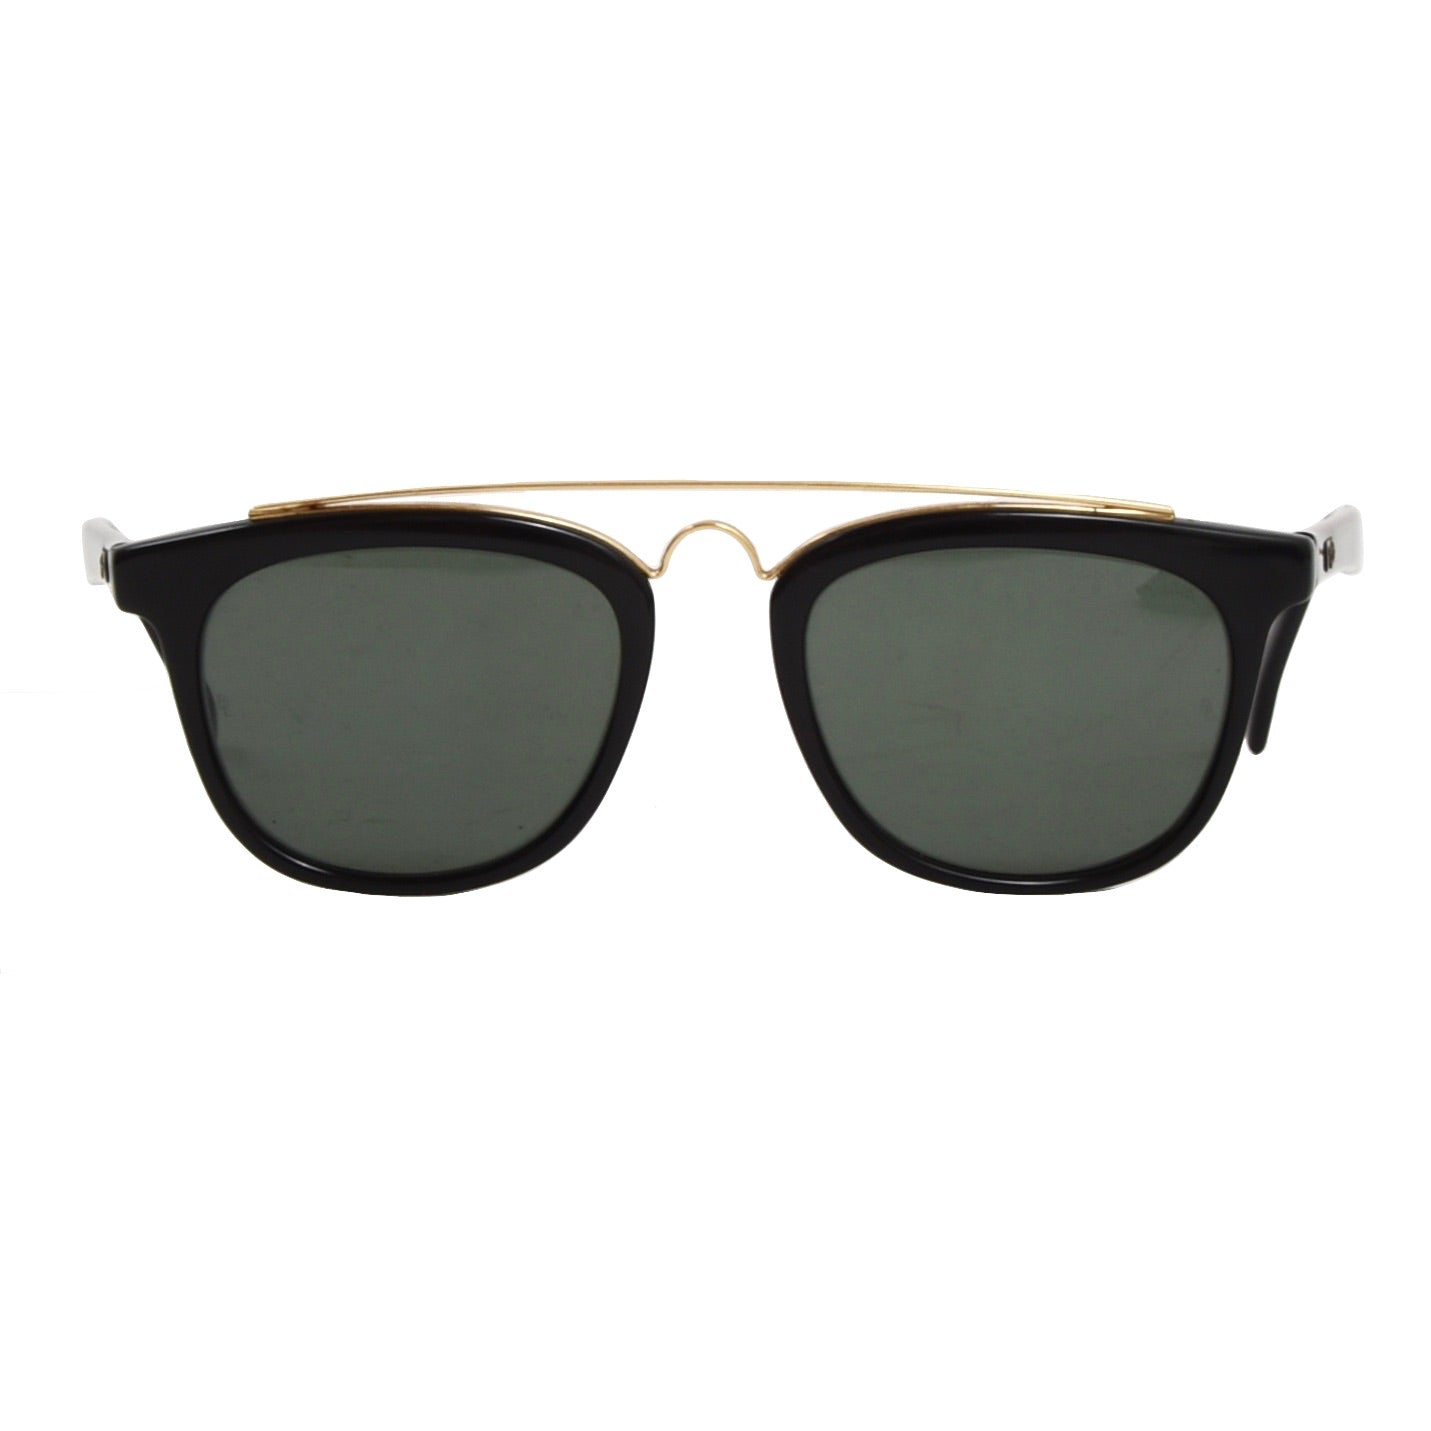 Bausch &amp; Lomb Ray-Ban Gatsby Style 5 Sonnenbrille - Schwarz